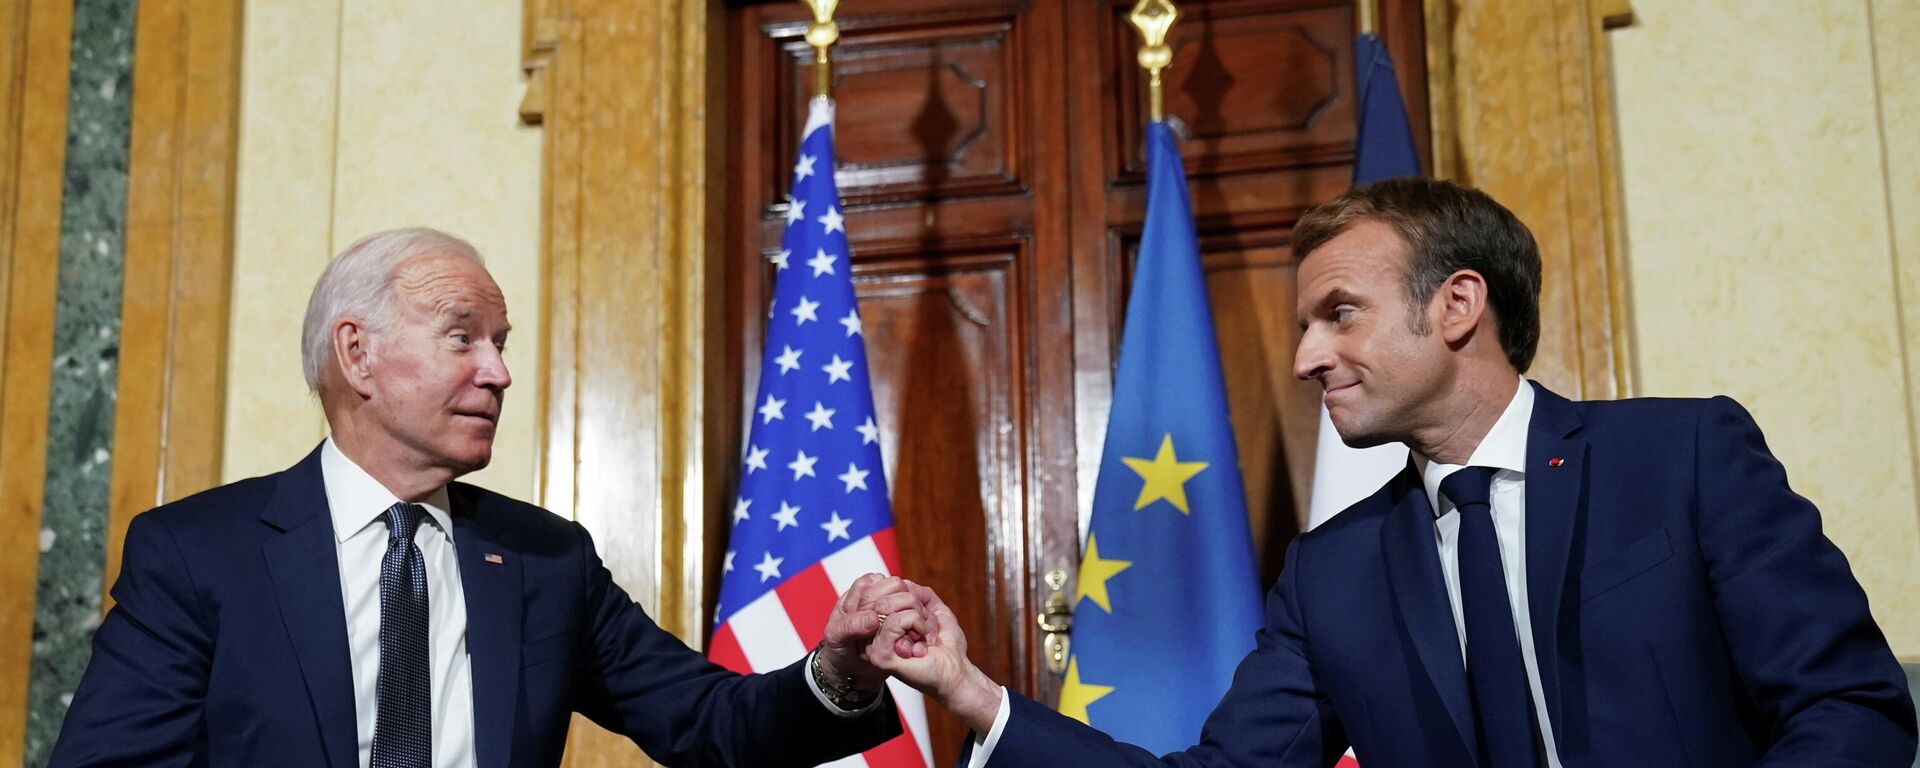 U.S. President Joe Biden meets with French President Emmanuel Macron ahead of the G20 summit in Rome, Italy October 29, 2021. - Sputnik International, 1920, 29.10.2021